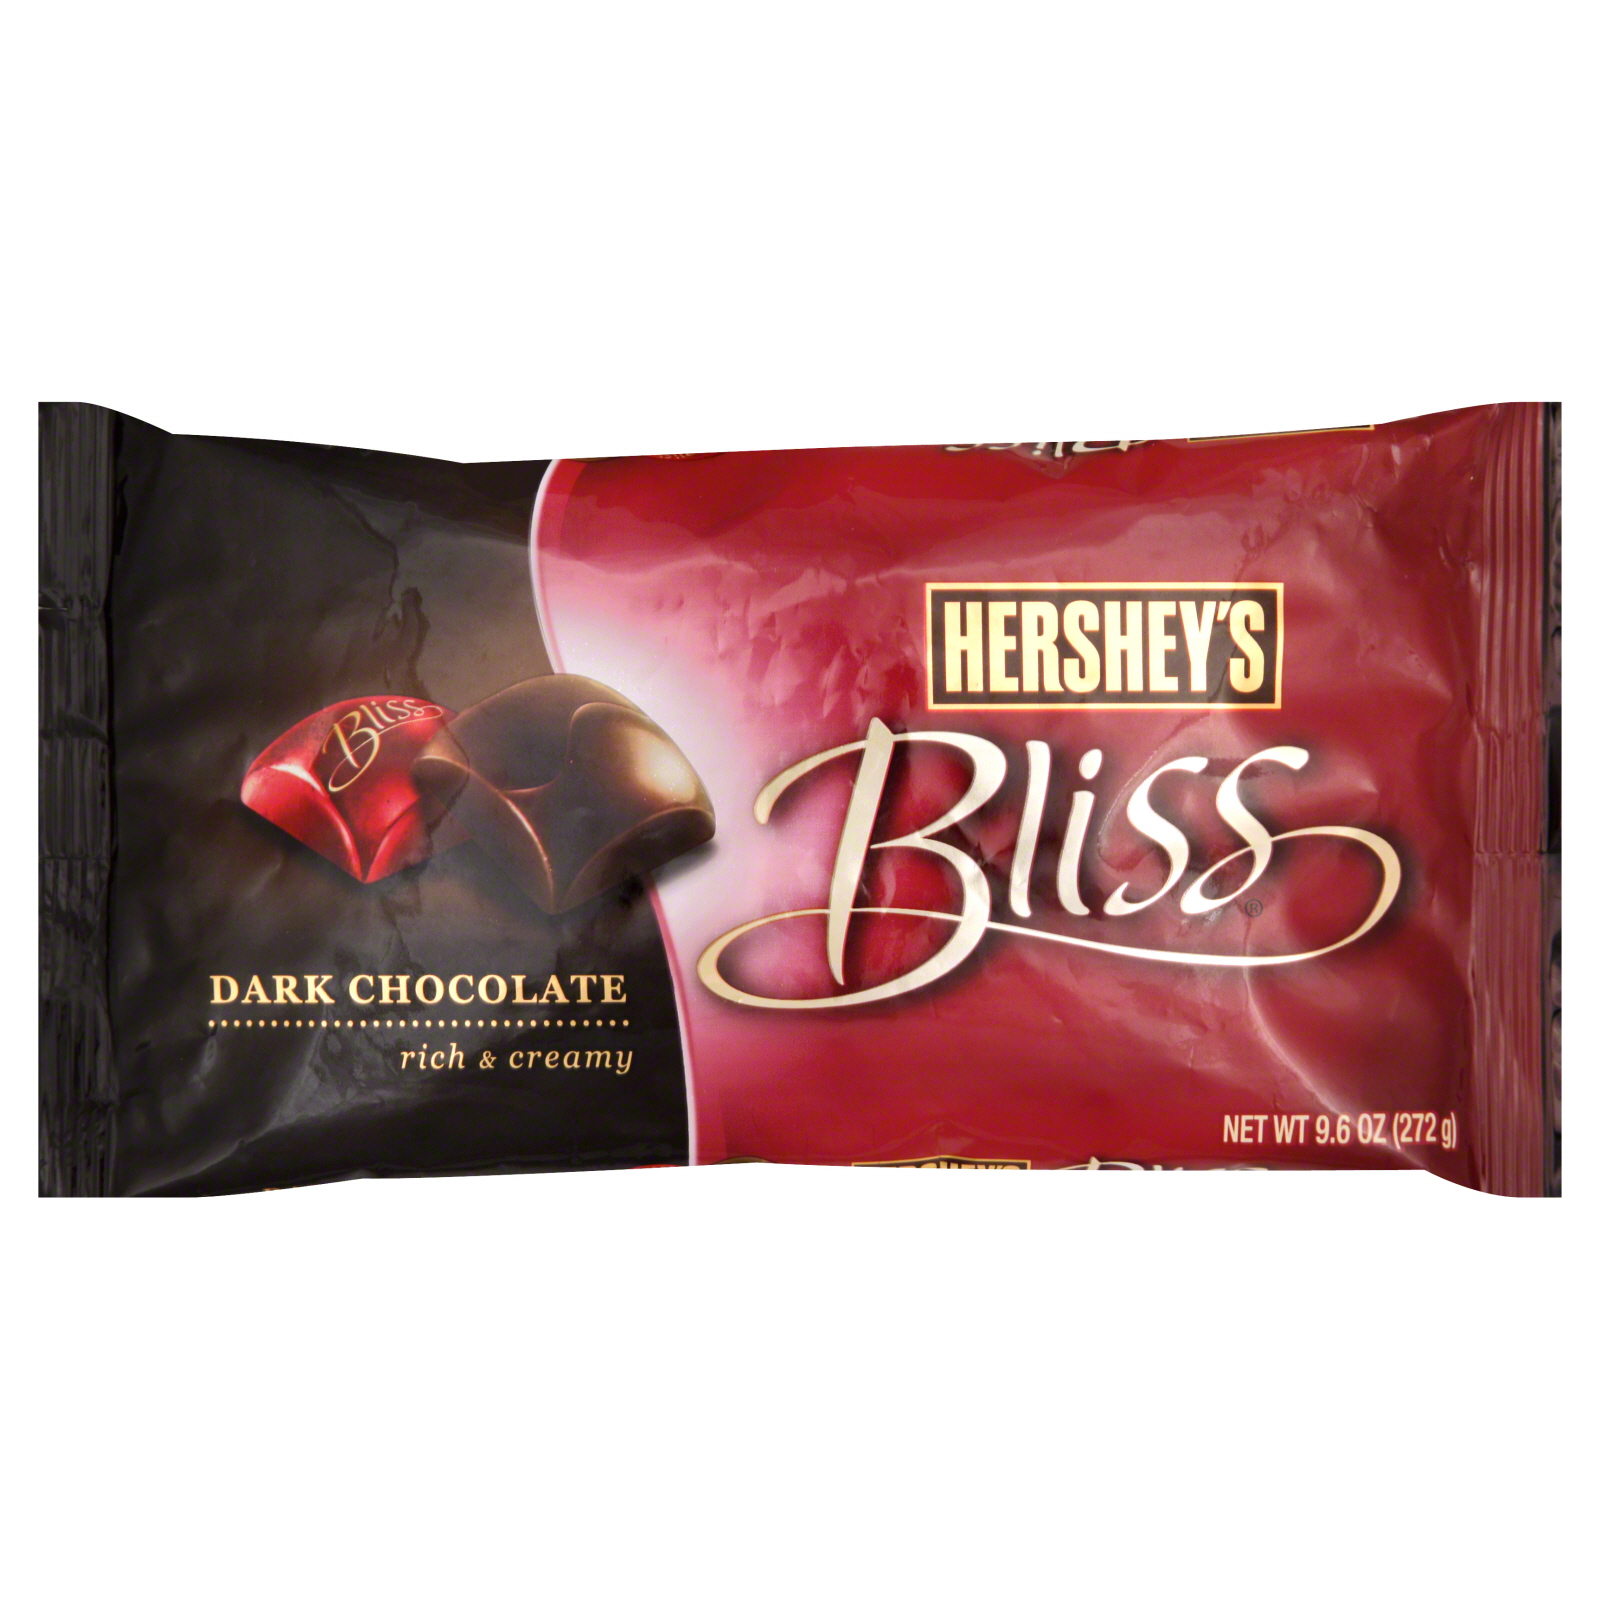 Hershey's Bliss Dark Chocolate, Rich & Creamy, 9.6 oz (272 g)